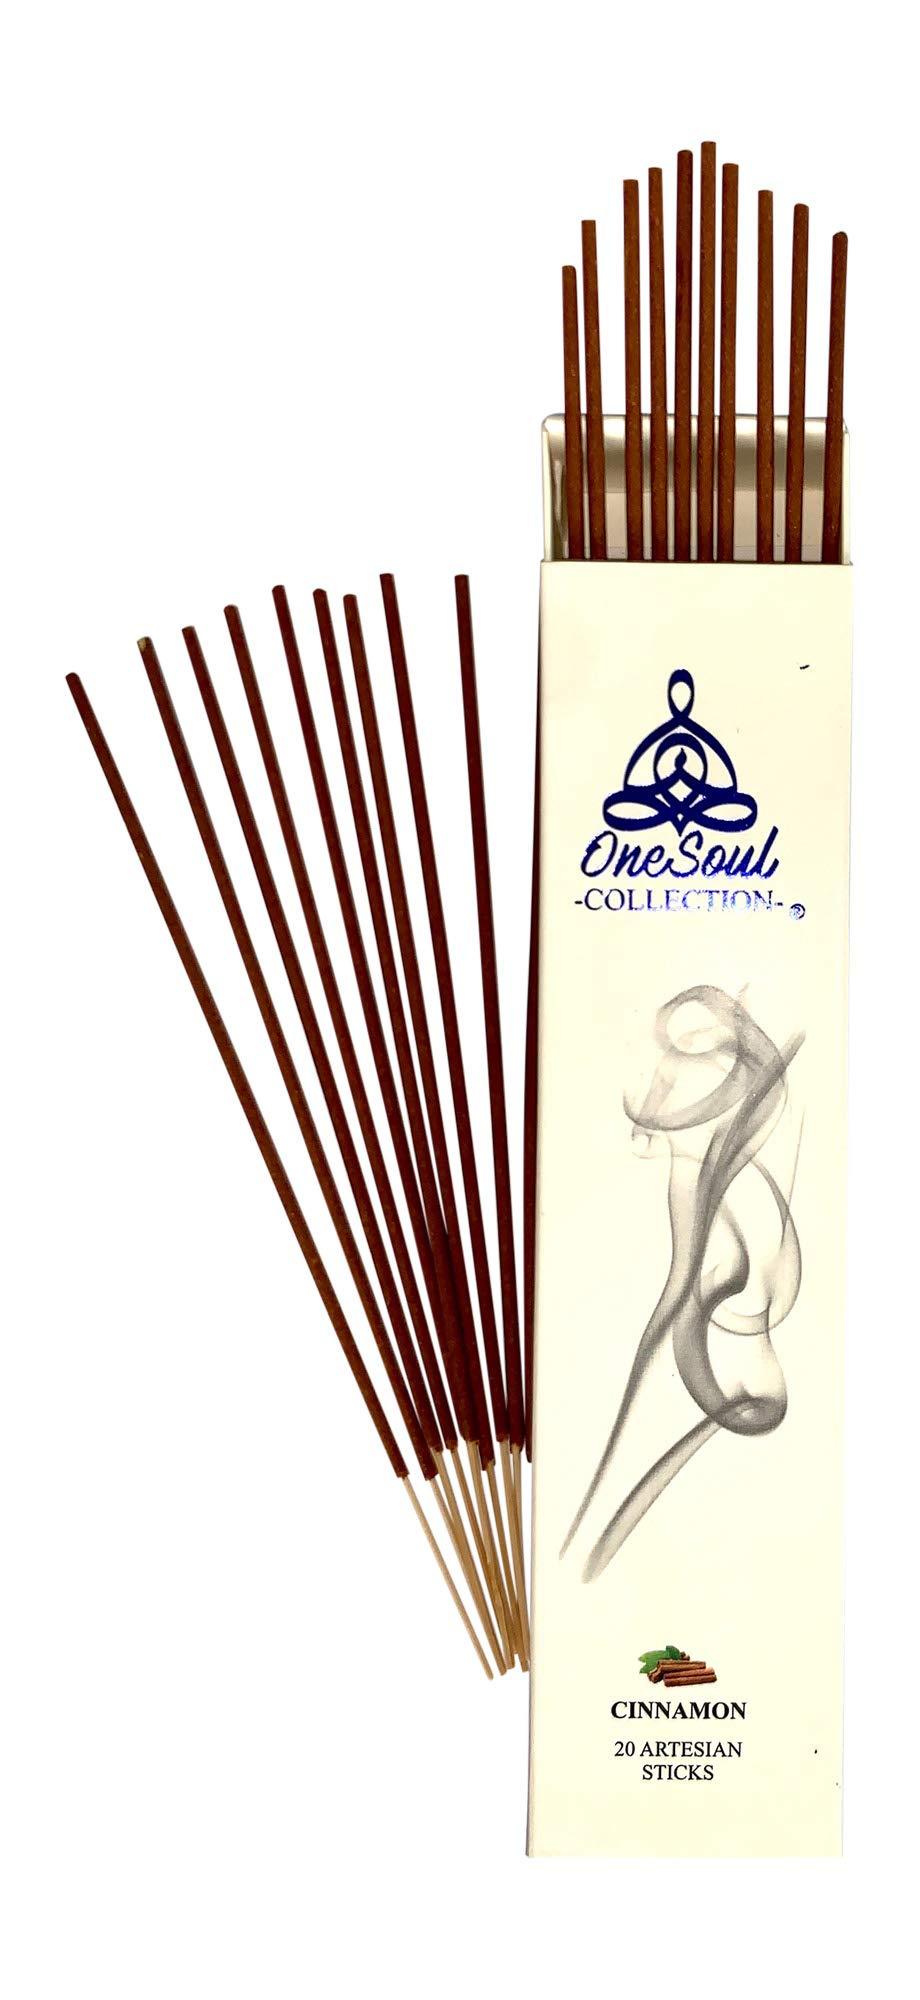  [AUSTRALIA] - OneSoul Collection Sweet Cinnamon Incense Sticks - 20 Premium Artesian Incense Sticks